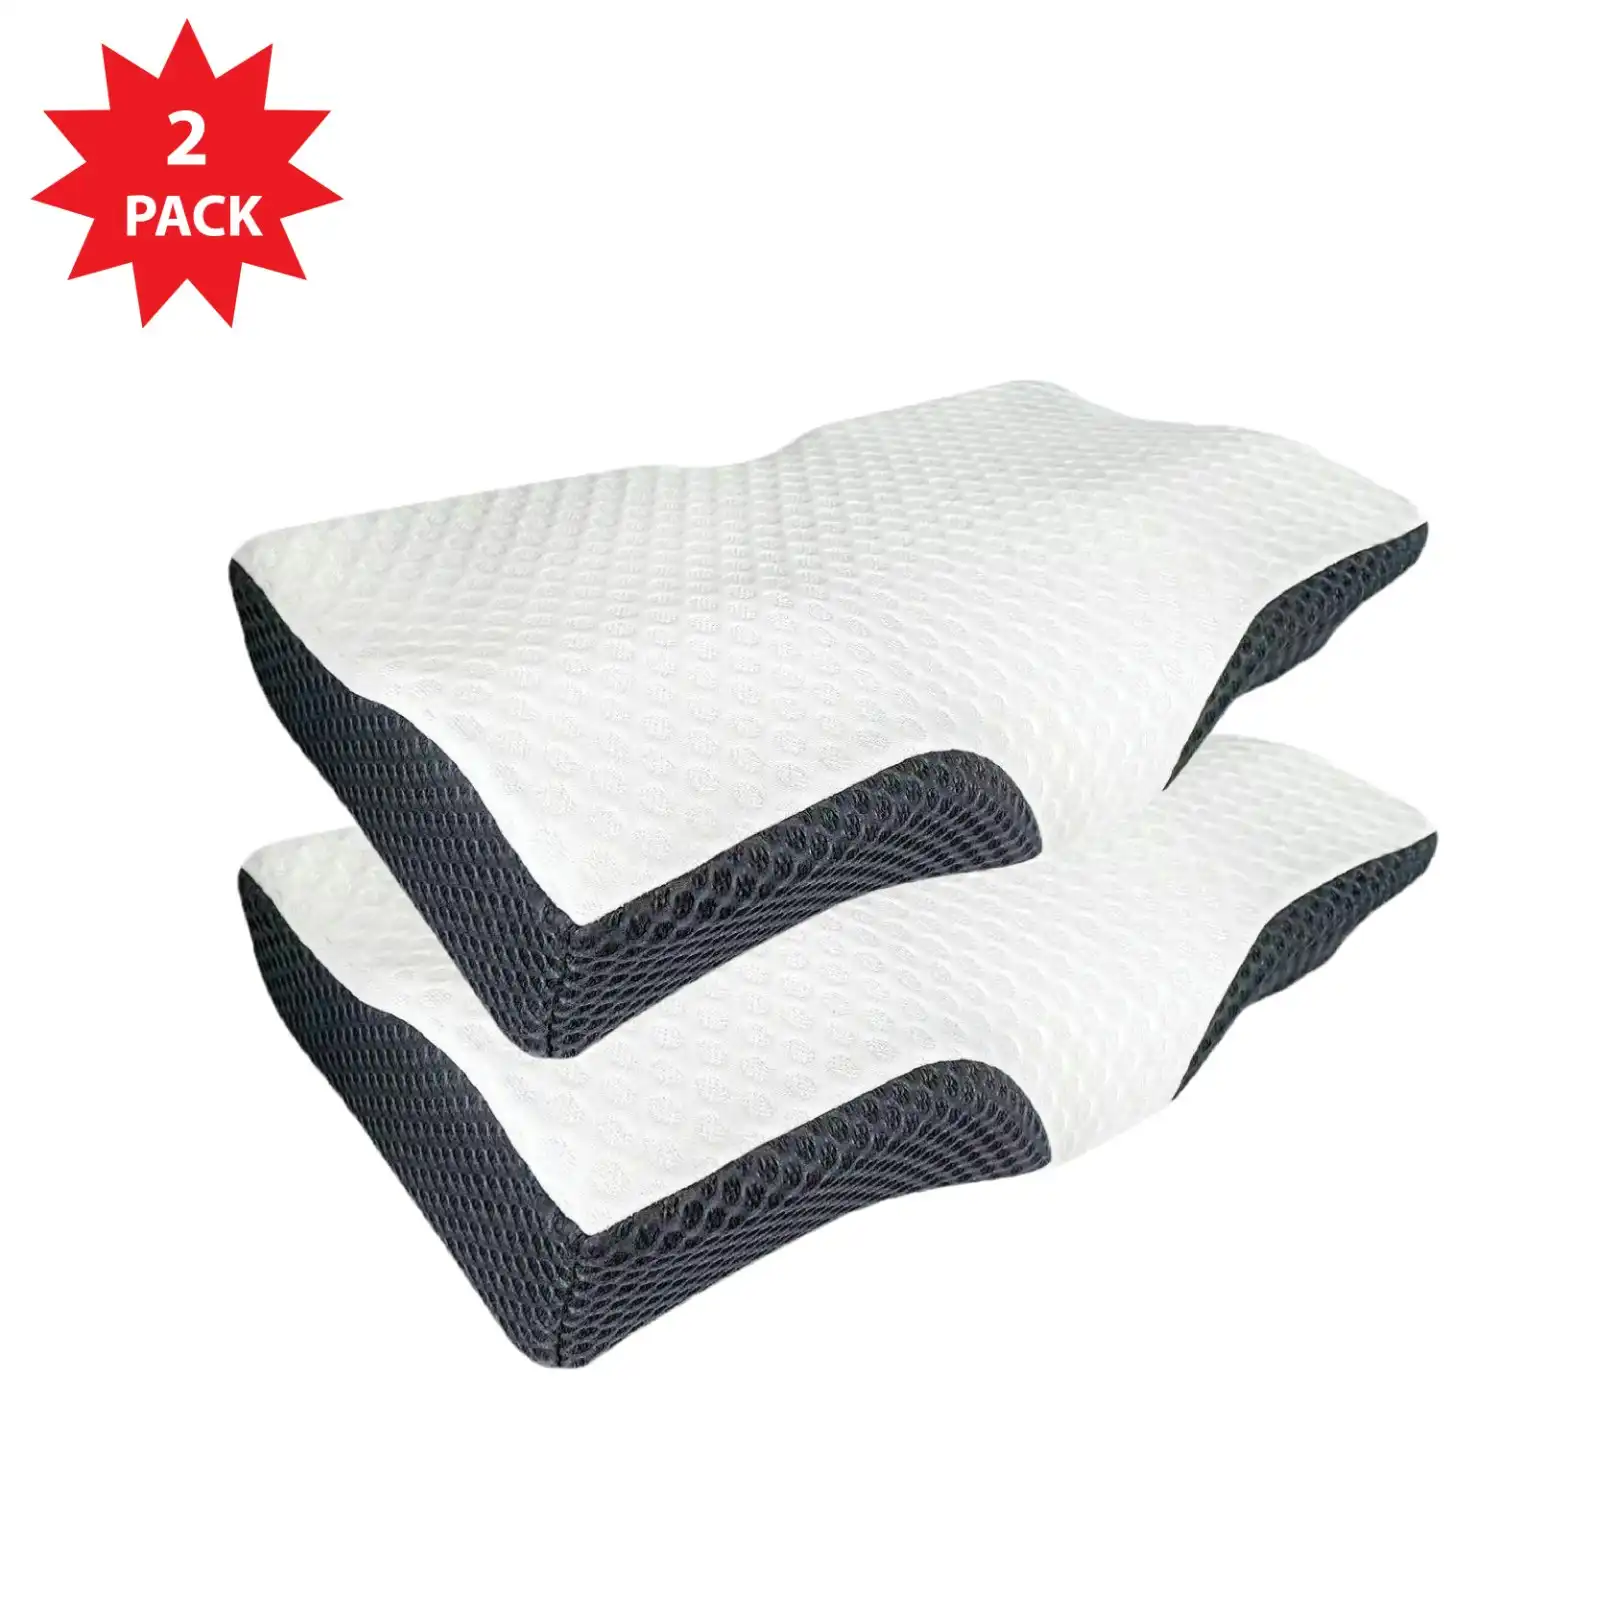 Vistara Sounds Sleep Memory Foam Cervical Neck Pillow - 2 Pack